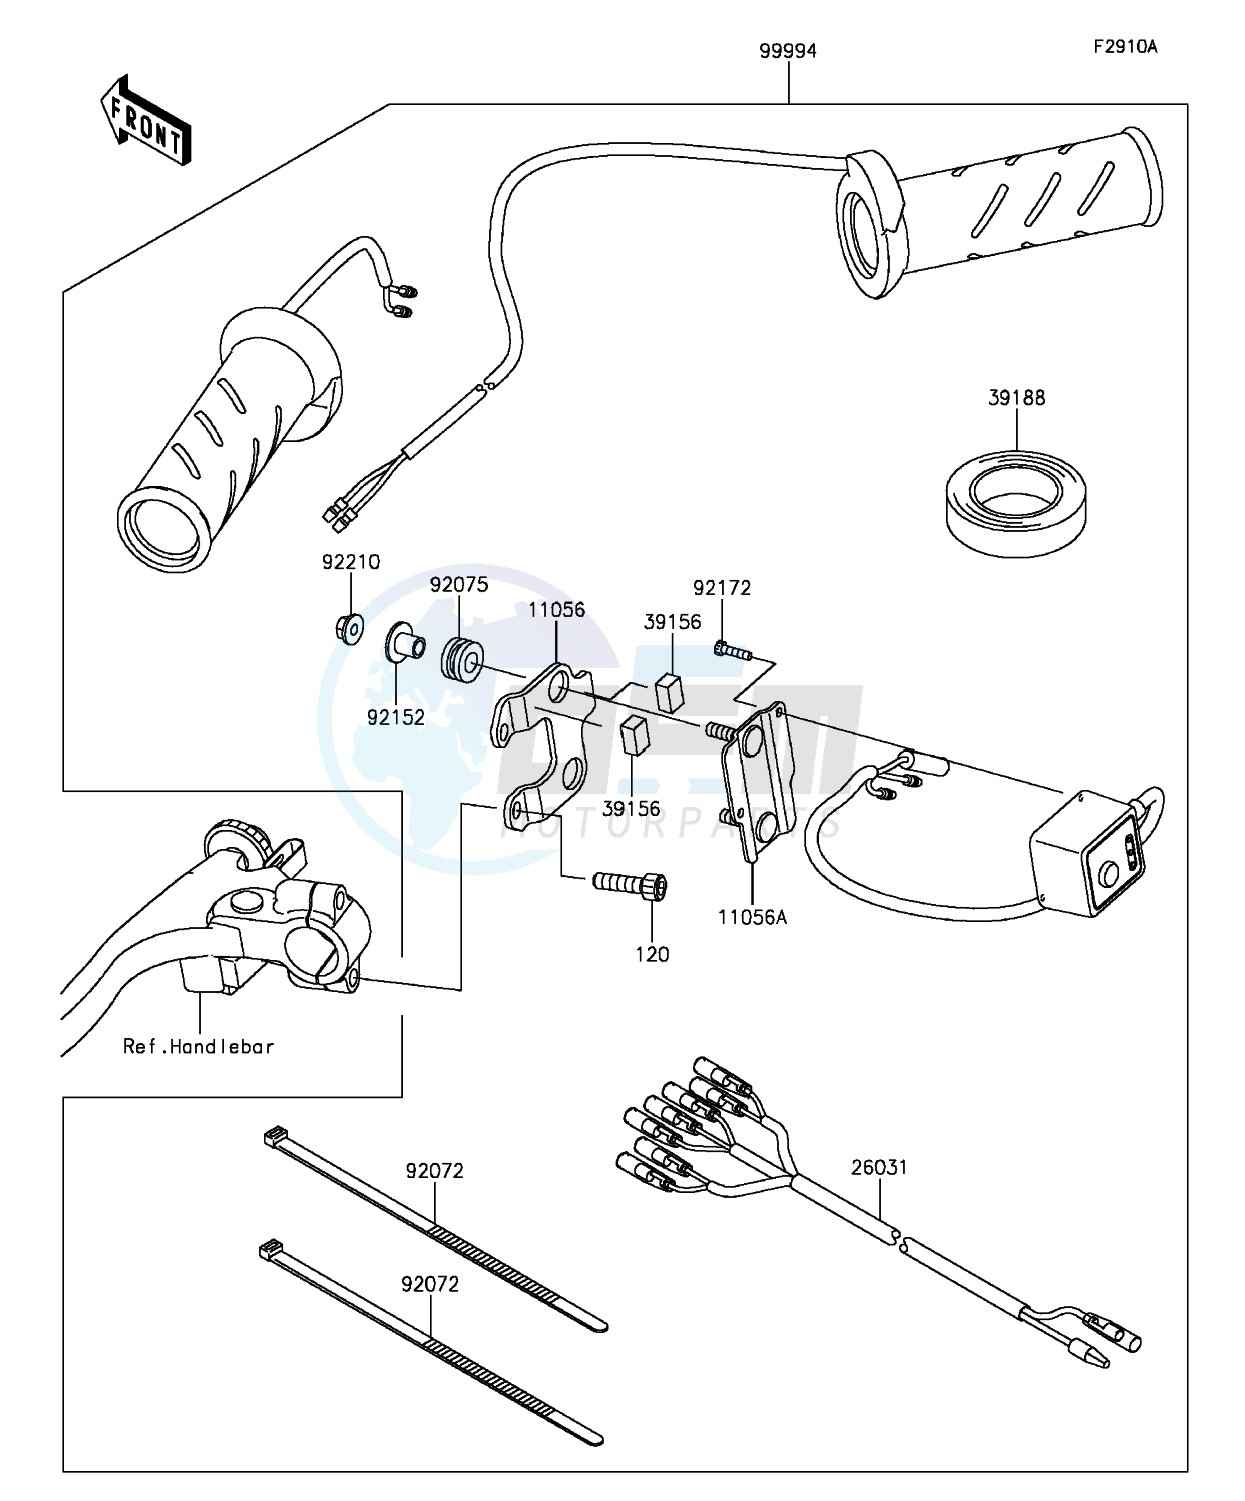 Accessory(Grip Heater) blueprint